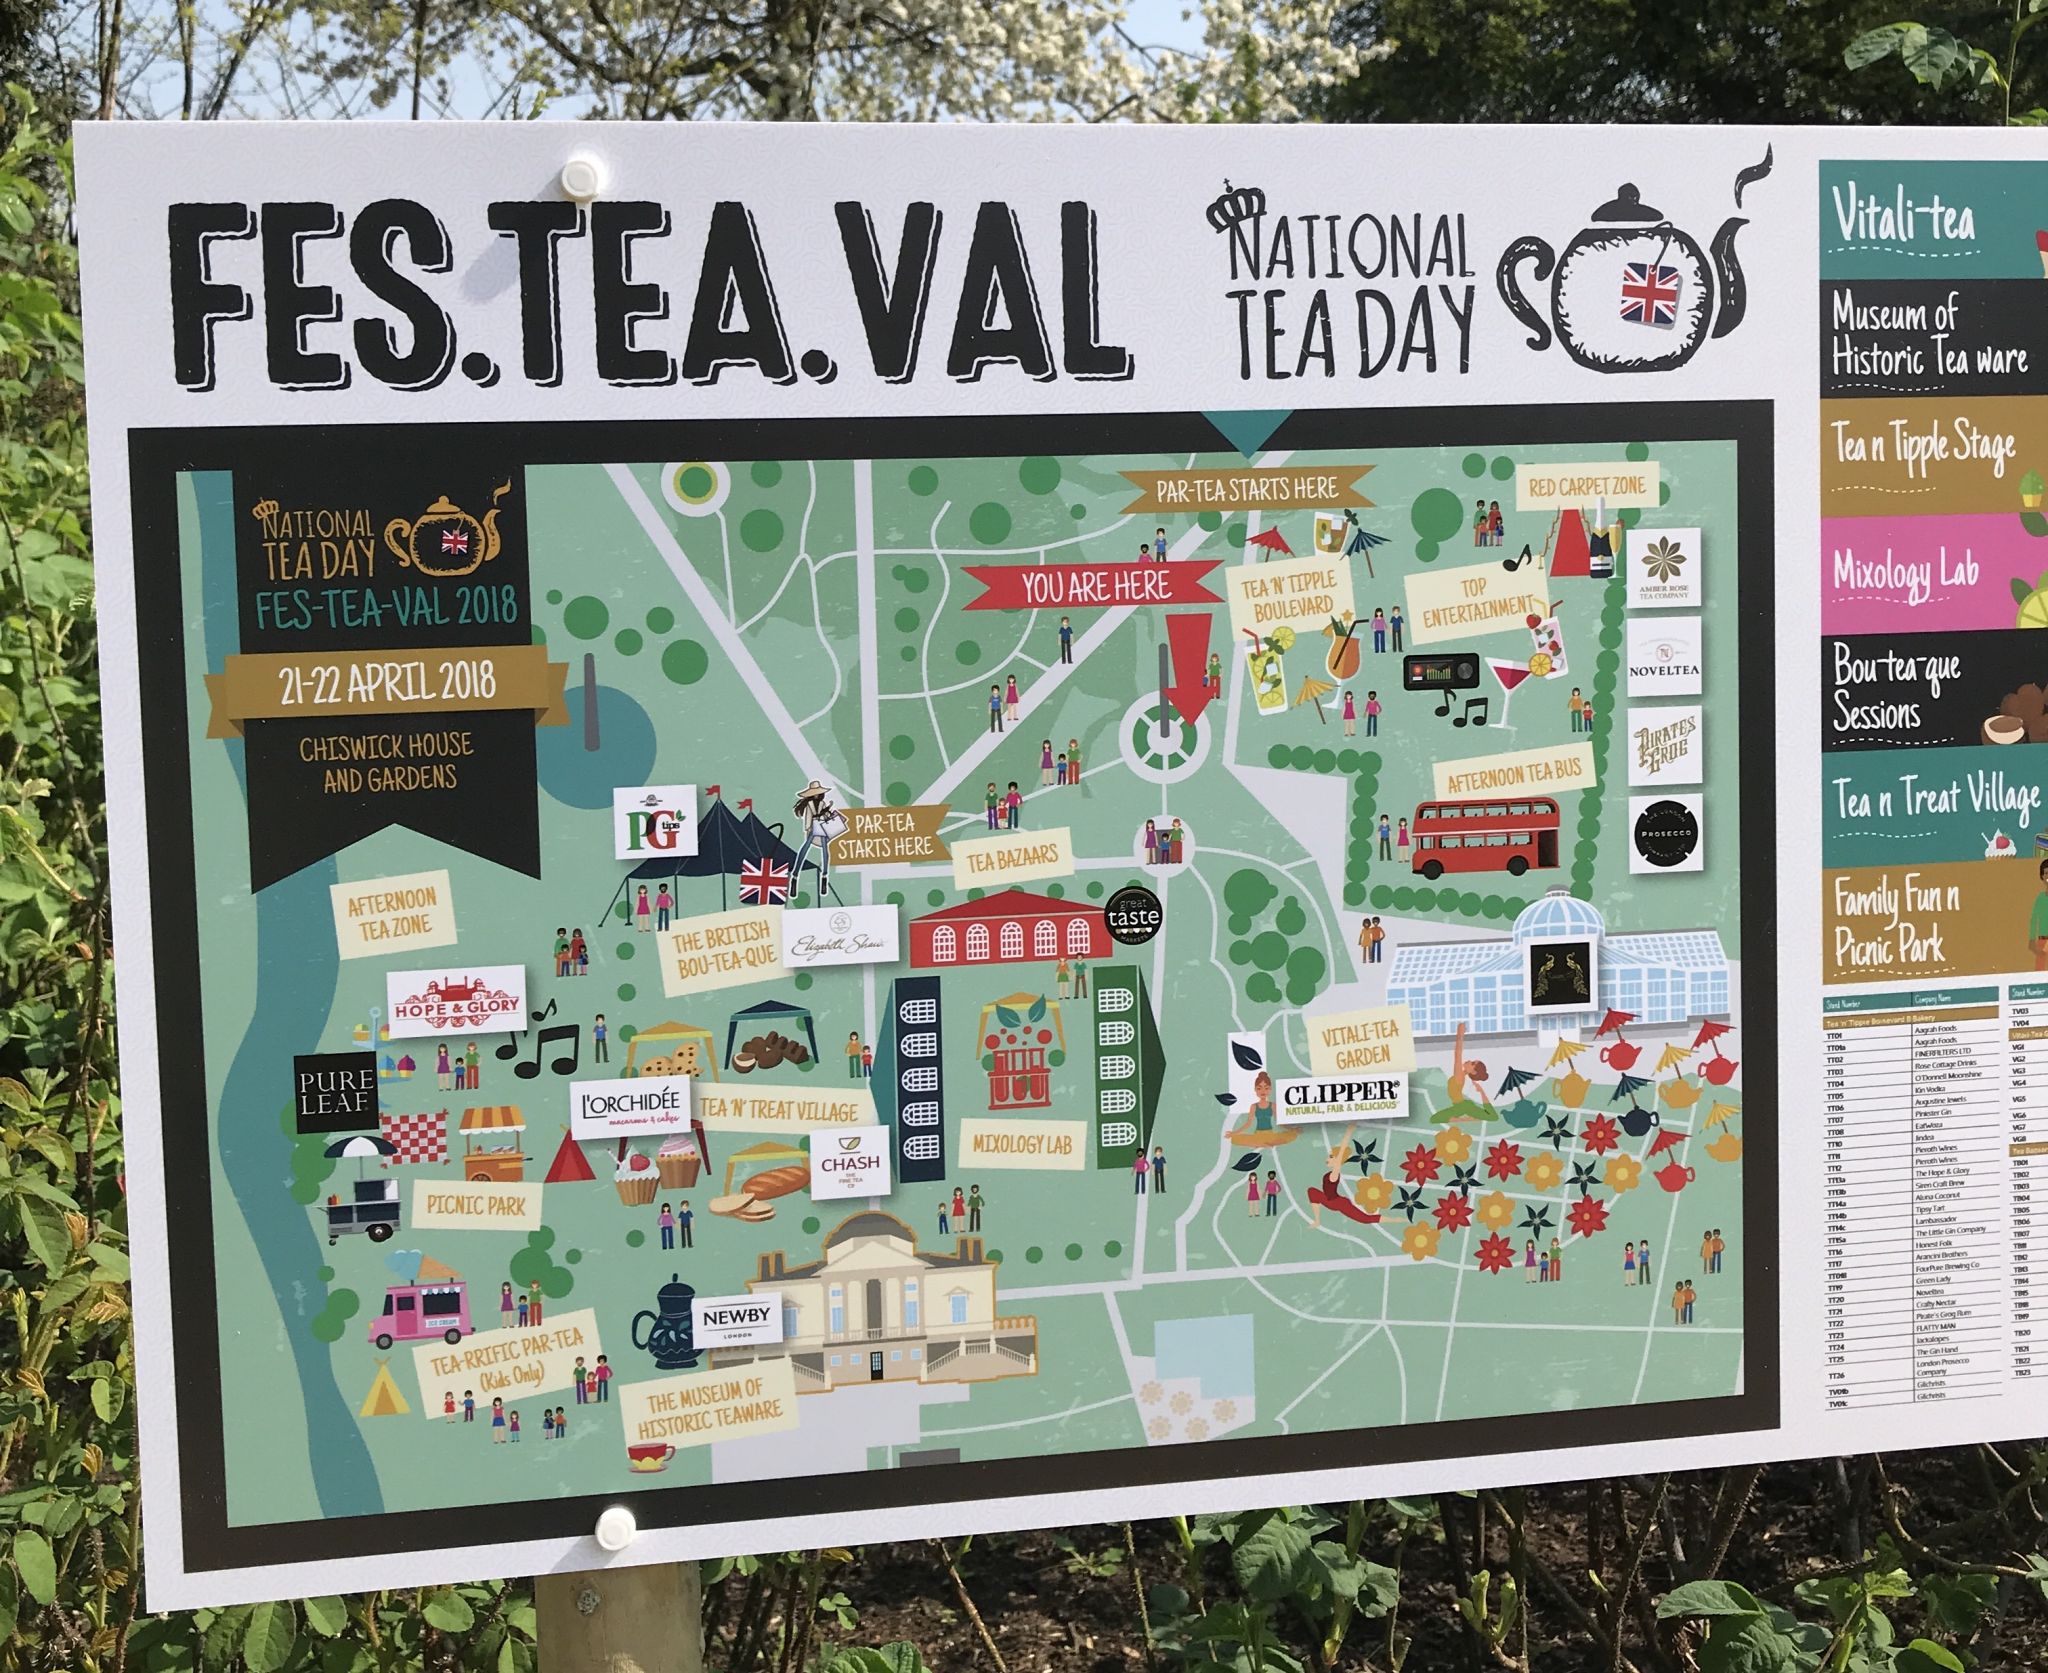 National Tea Day:  My Fes-tea-val experience